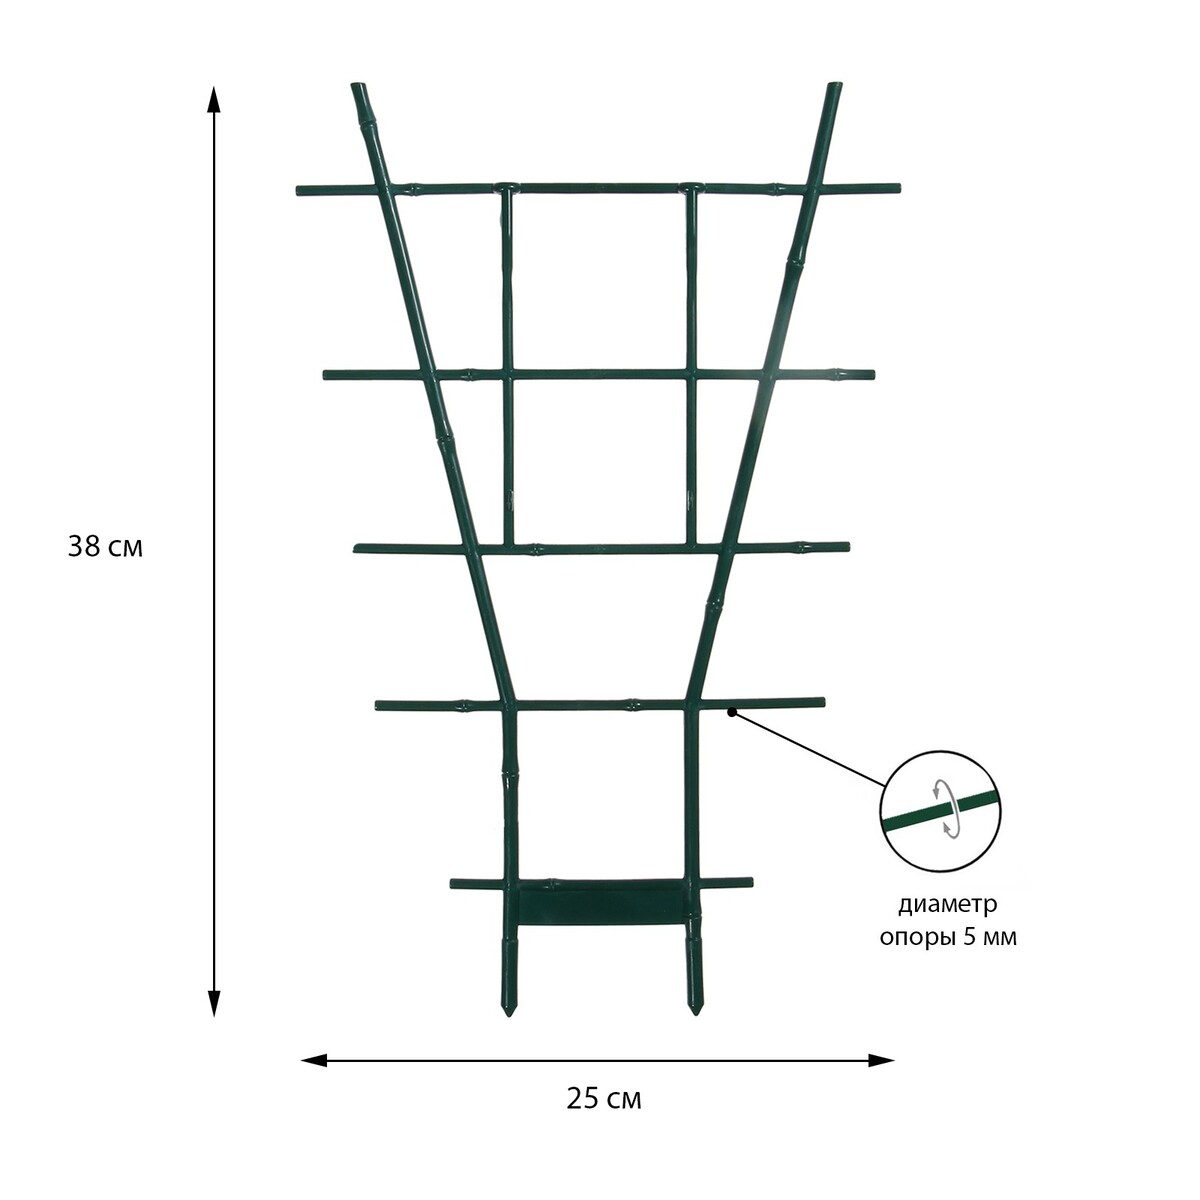 Шпалера, 38 × 25 × 0.5 см, пластик, зеленая, greengo папка скоросшиватель hor lines пластик 0 7мм зеленая